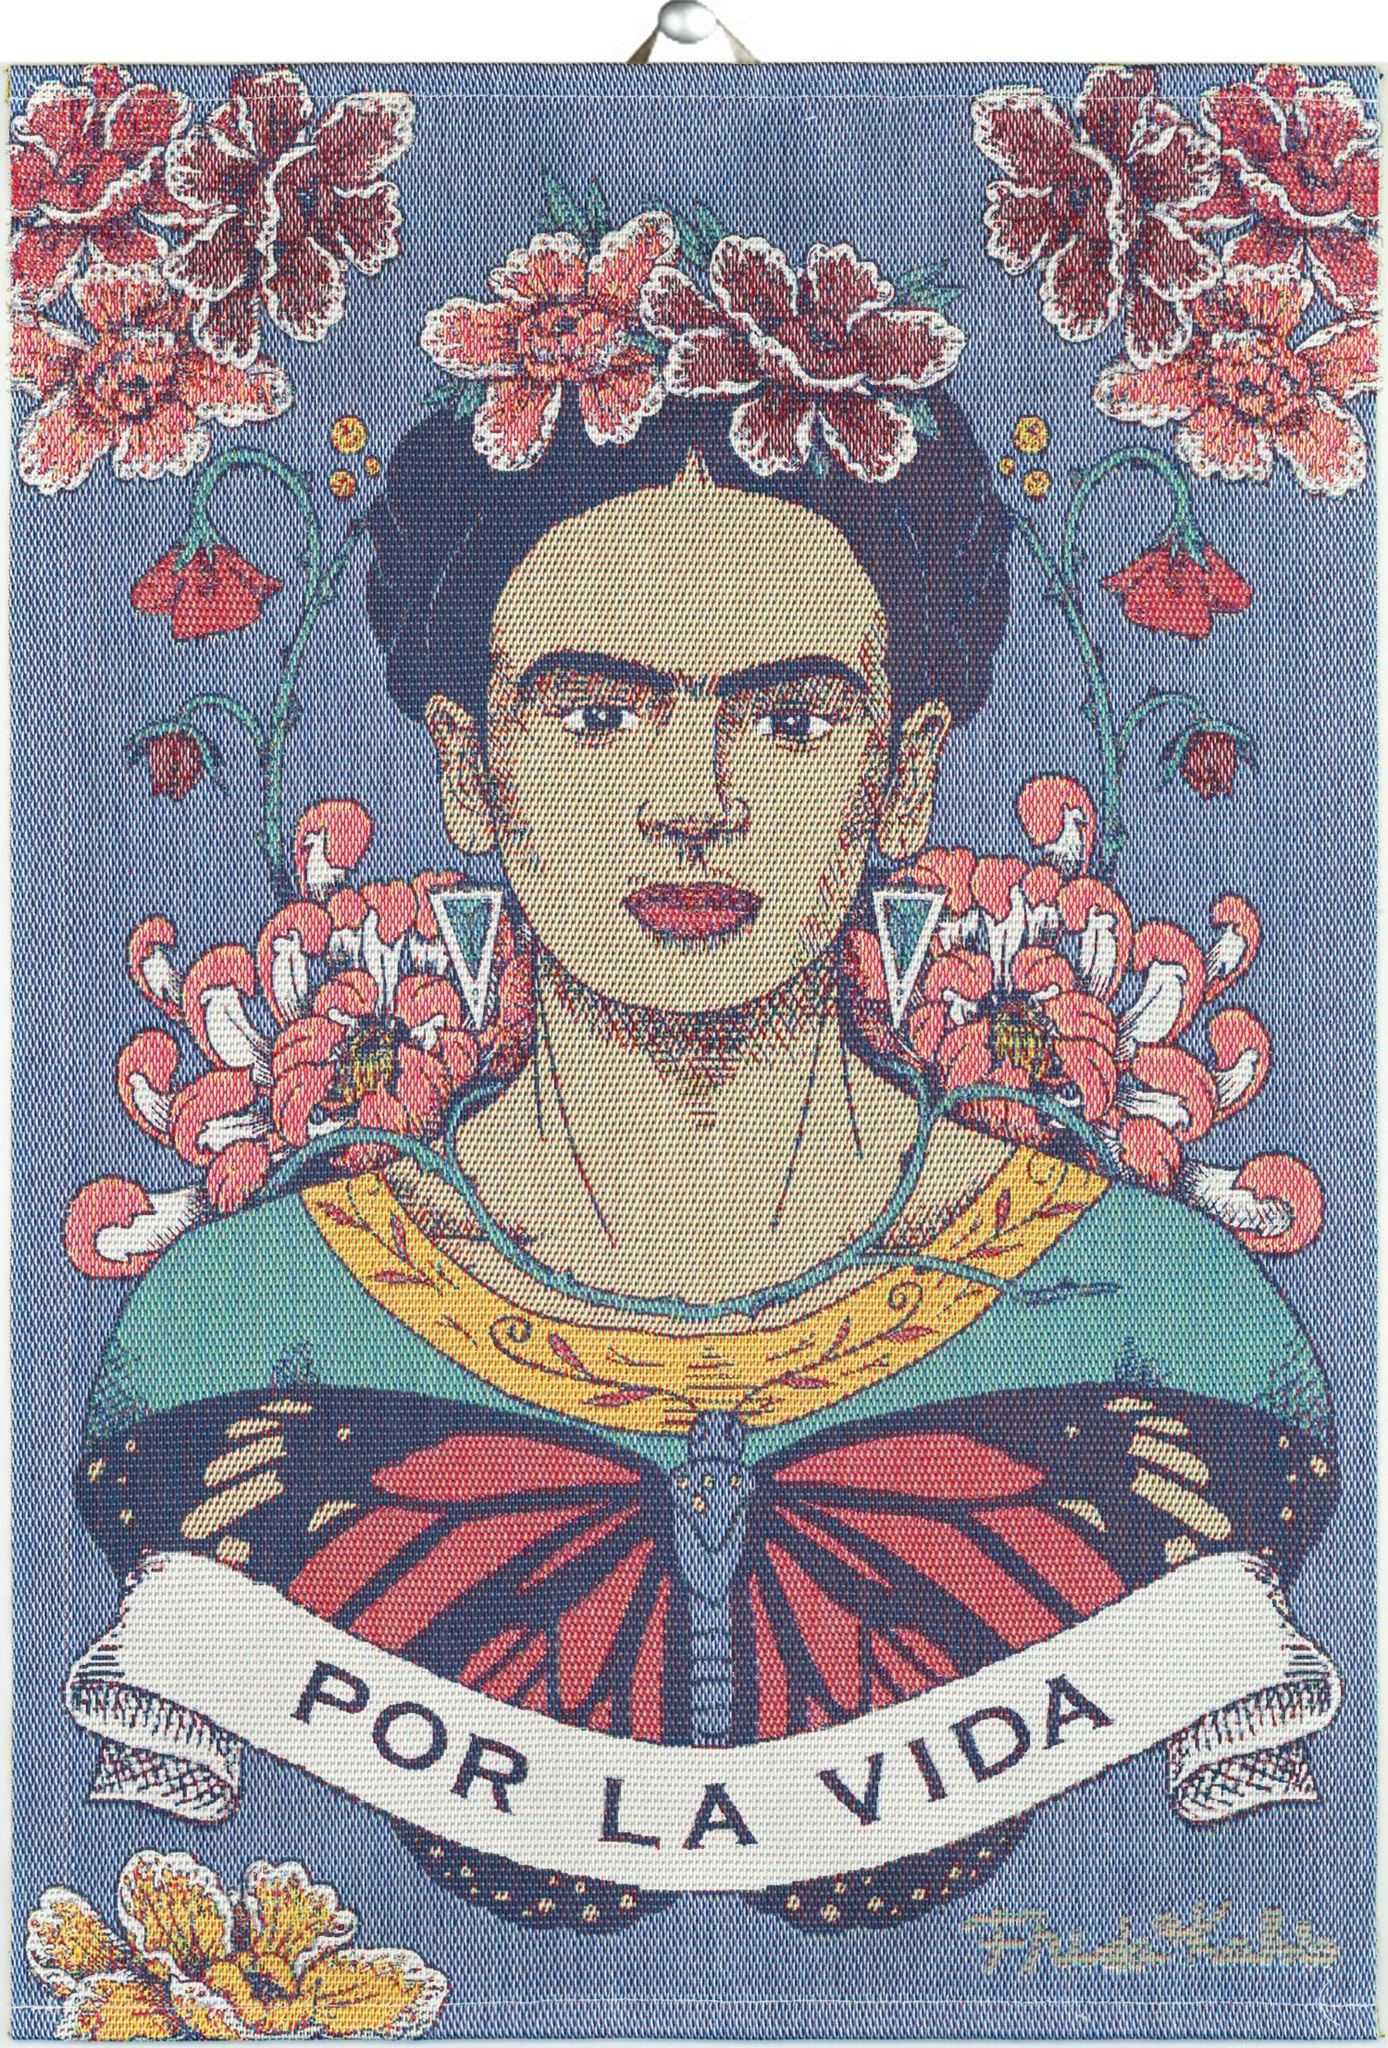 Kökshandduk Frida Kahlo "Vida"